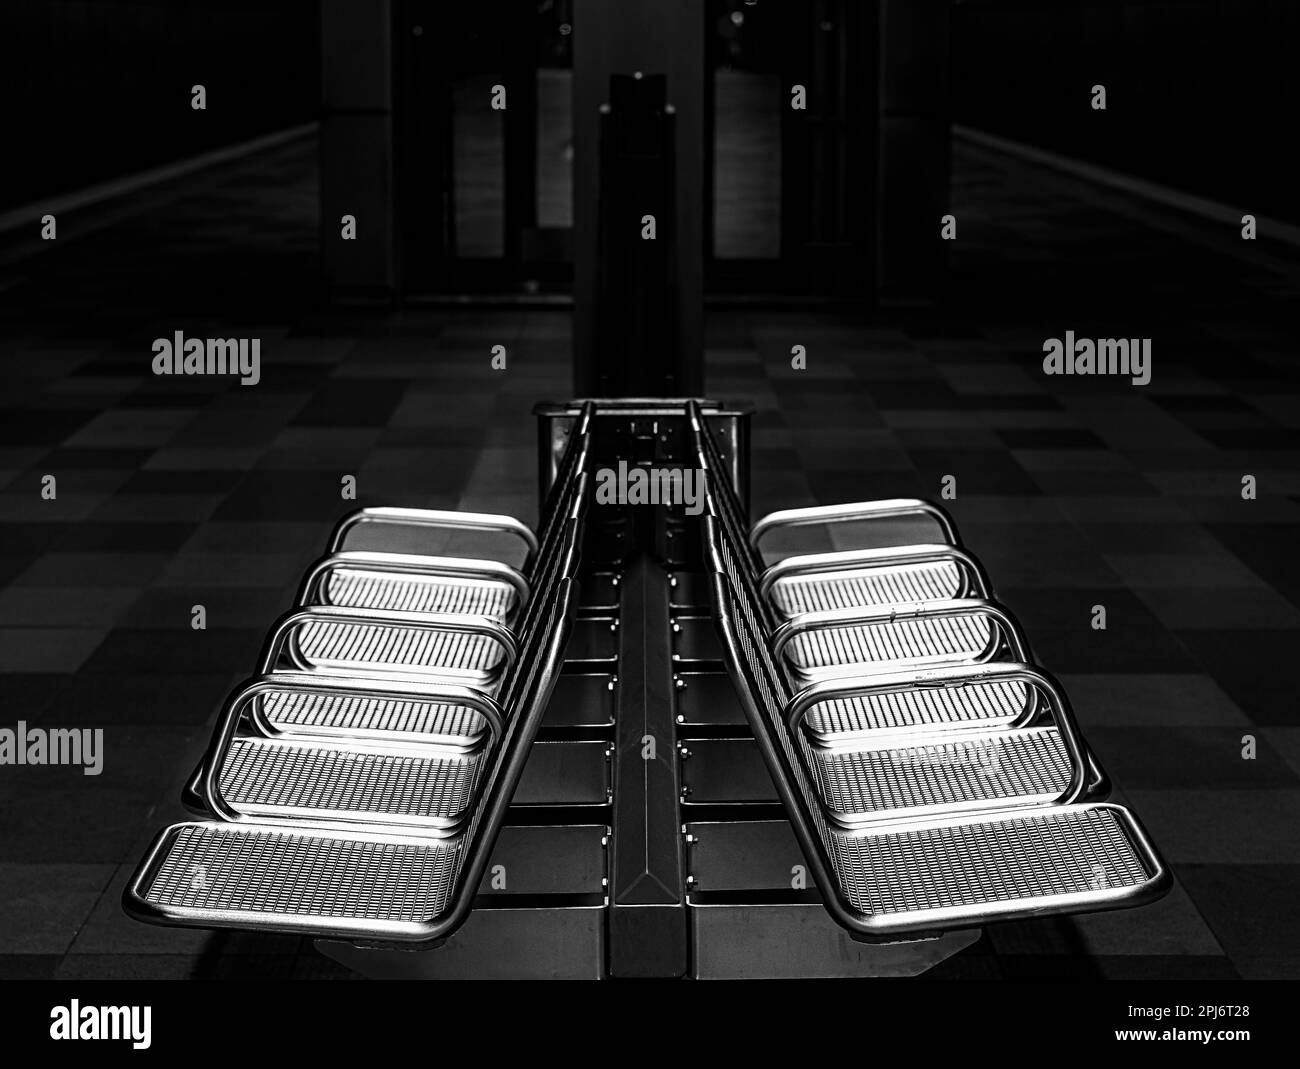 Black And White Photography, Chrome Seats On Platform Überseequartier, Hamburg, Germany Stock Photo